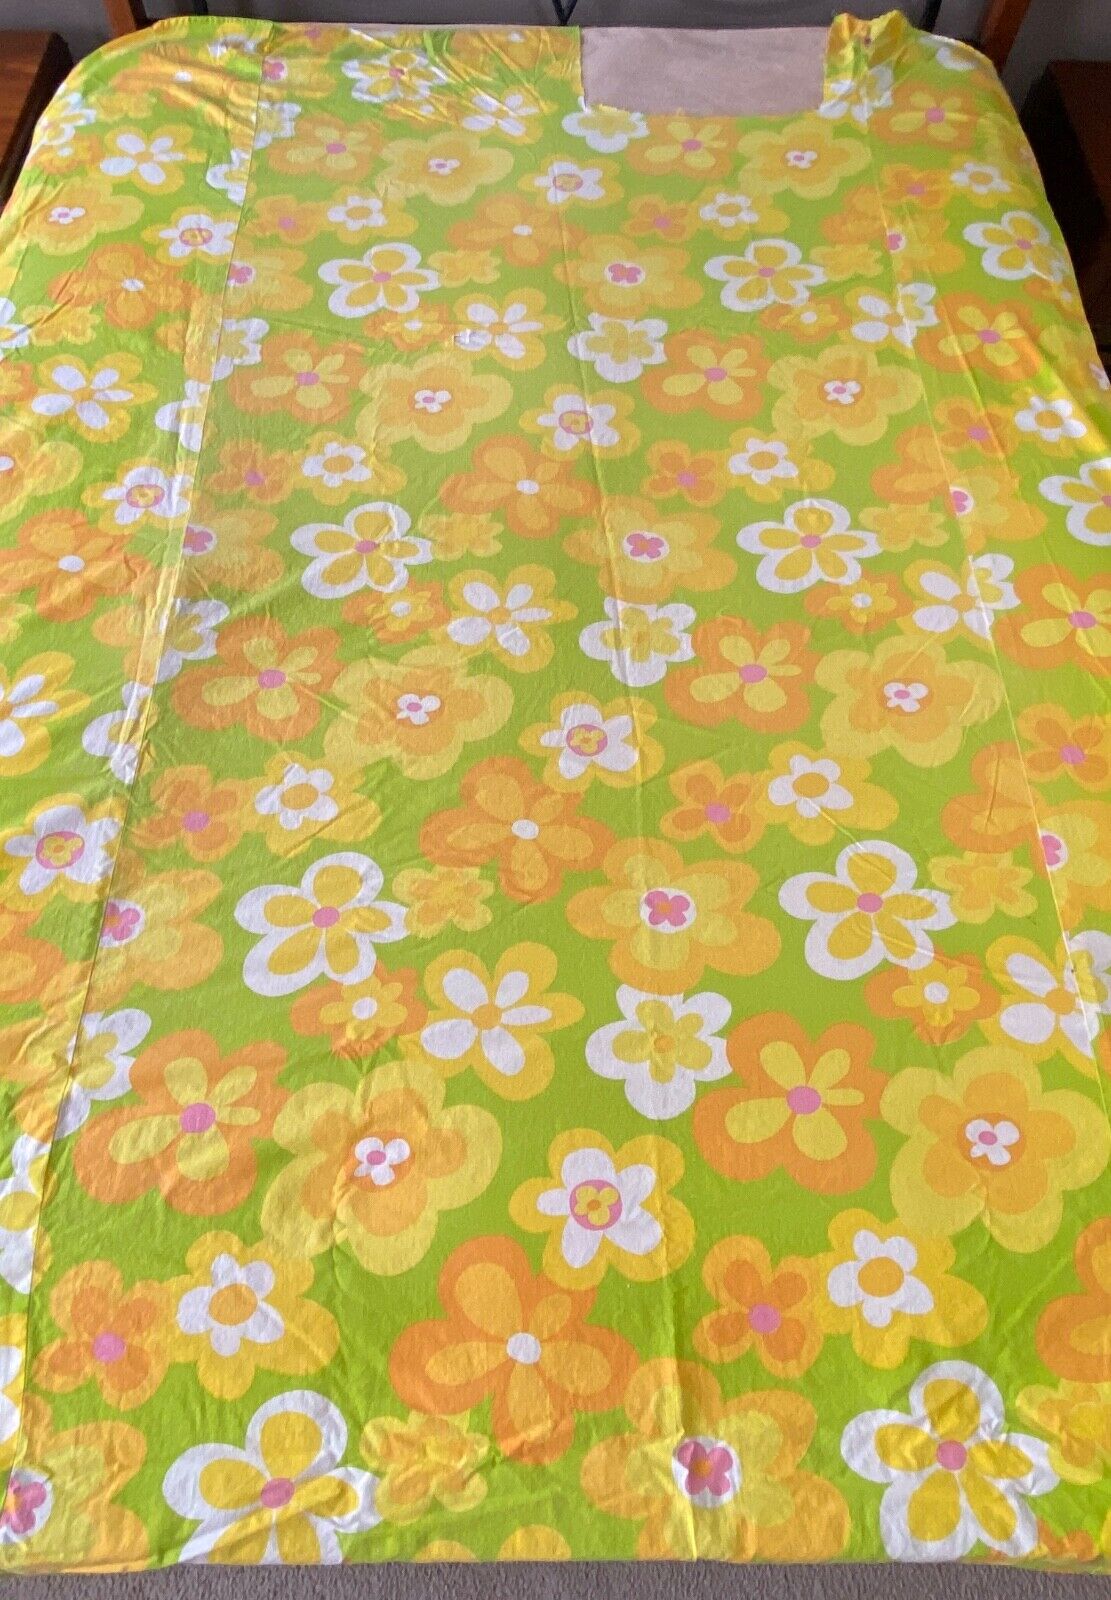 Vintage Sears Floral Coverlet Bedspread Mod Flowers Damaged Upcycle Repurpose